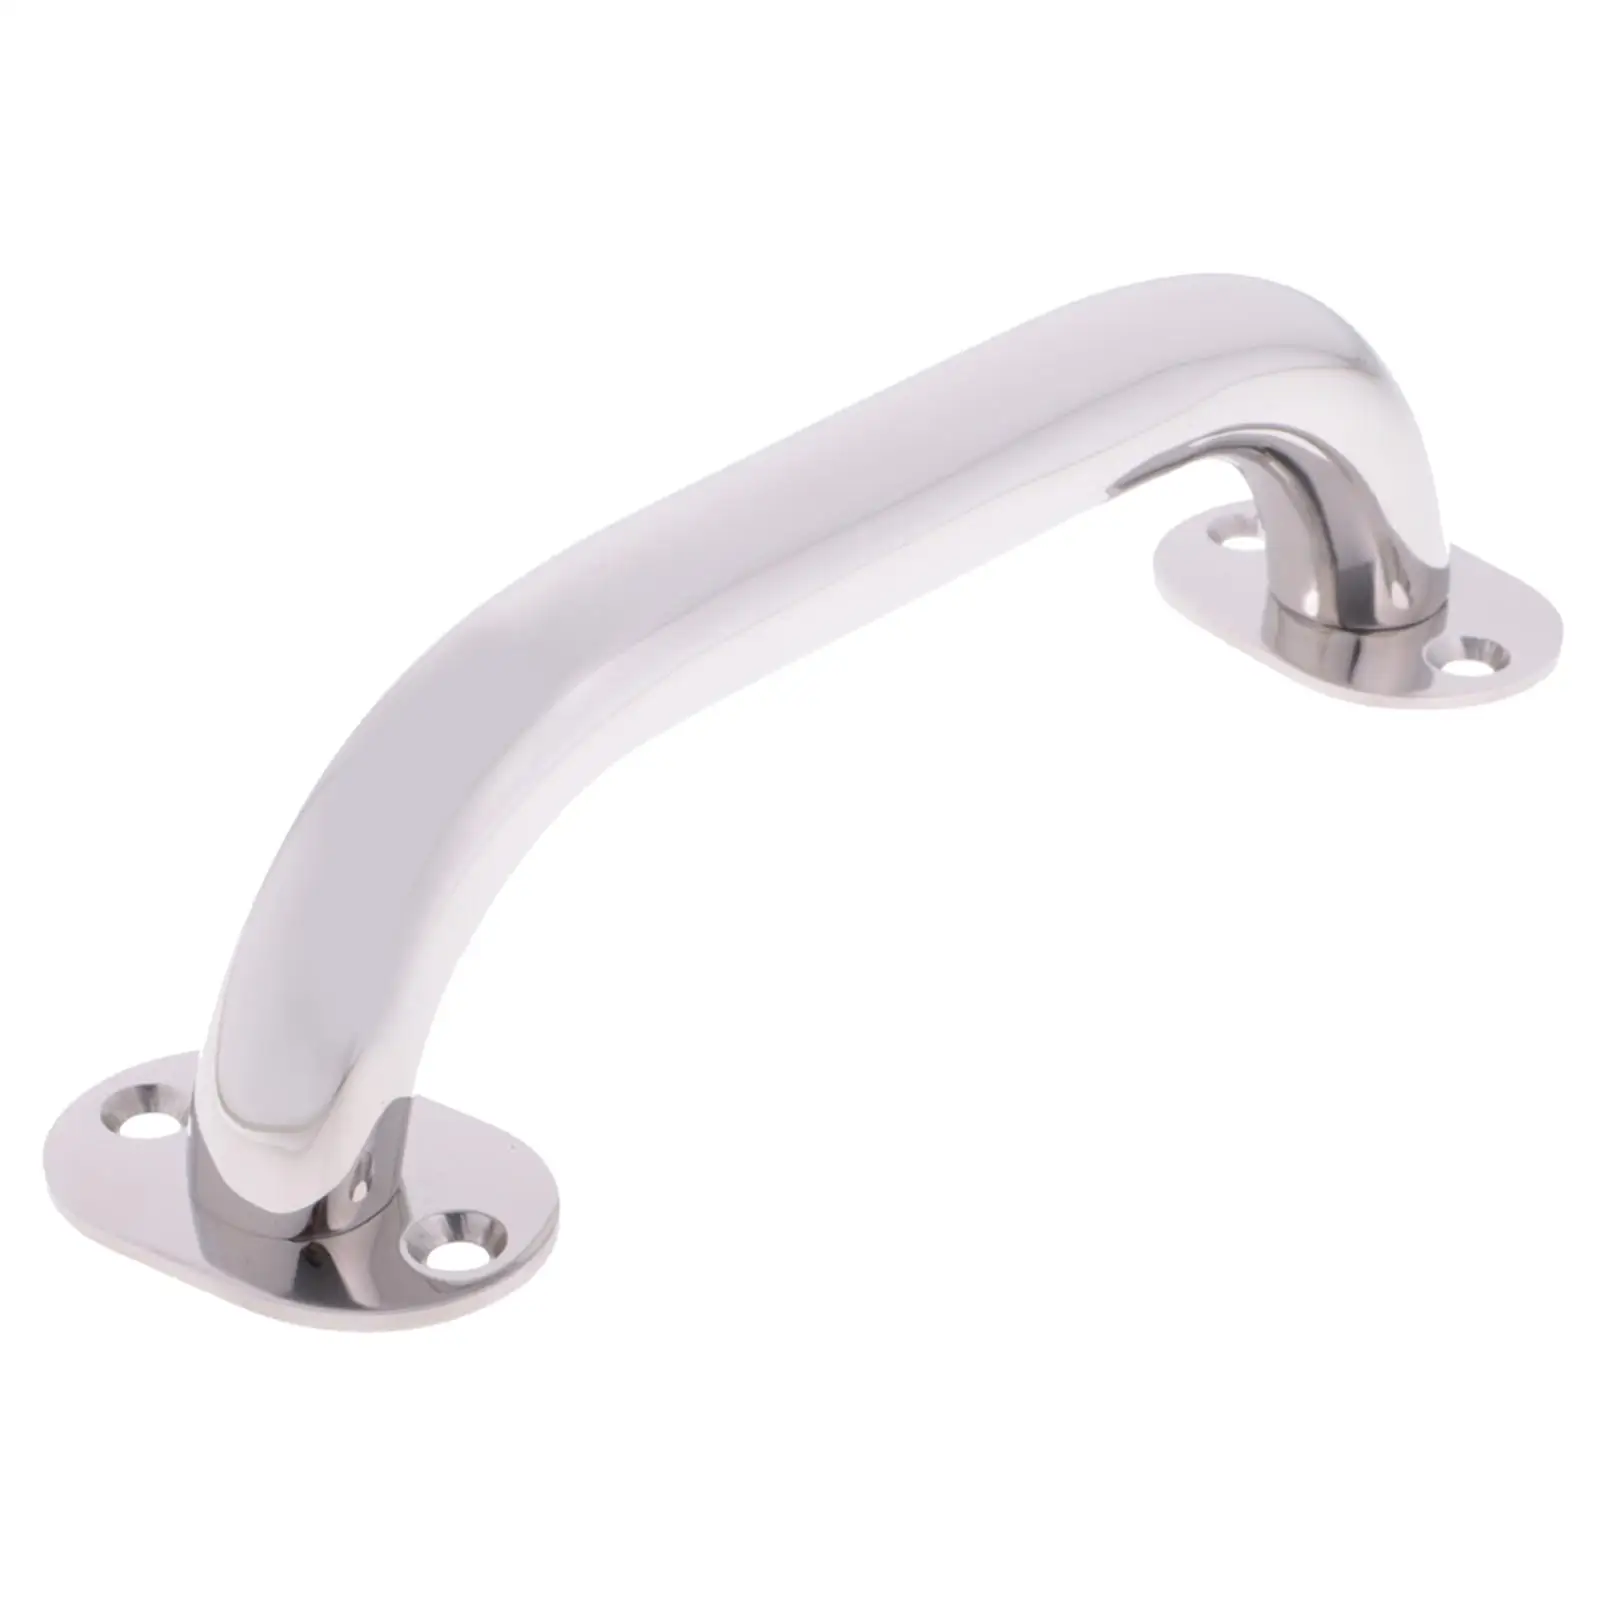 228mm bathtub handle stainless steel bathtub handle grab bar bathroom shower